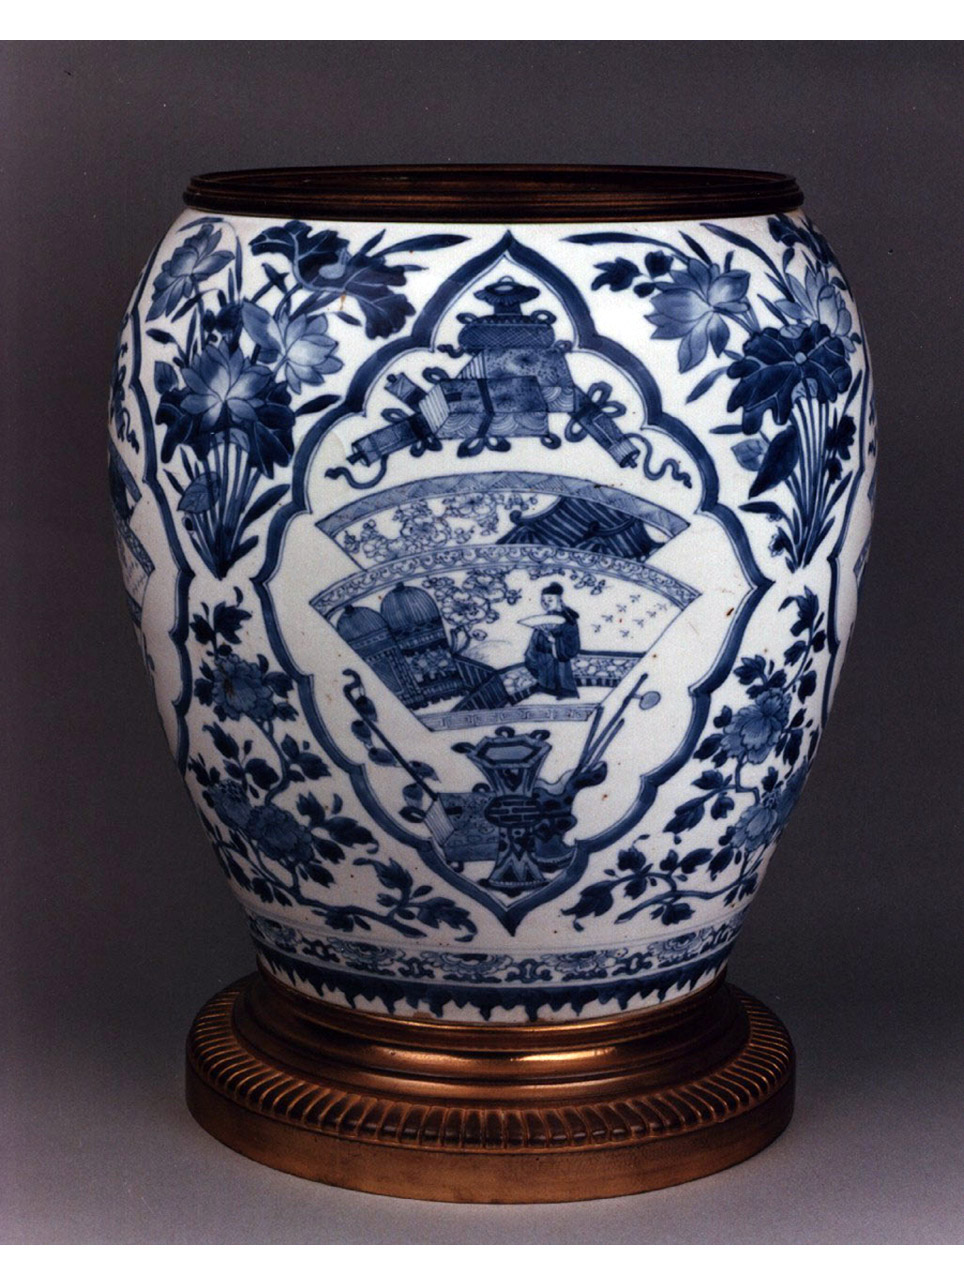 motivi decorativi vegetali stilizzati (vaso) - manifattura cinese, produzione europea (secc. XVII/ XVIII)